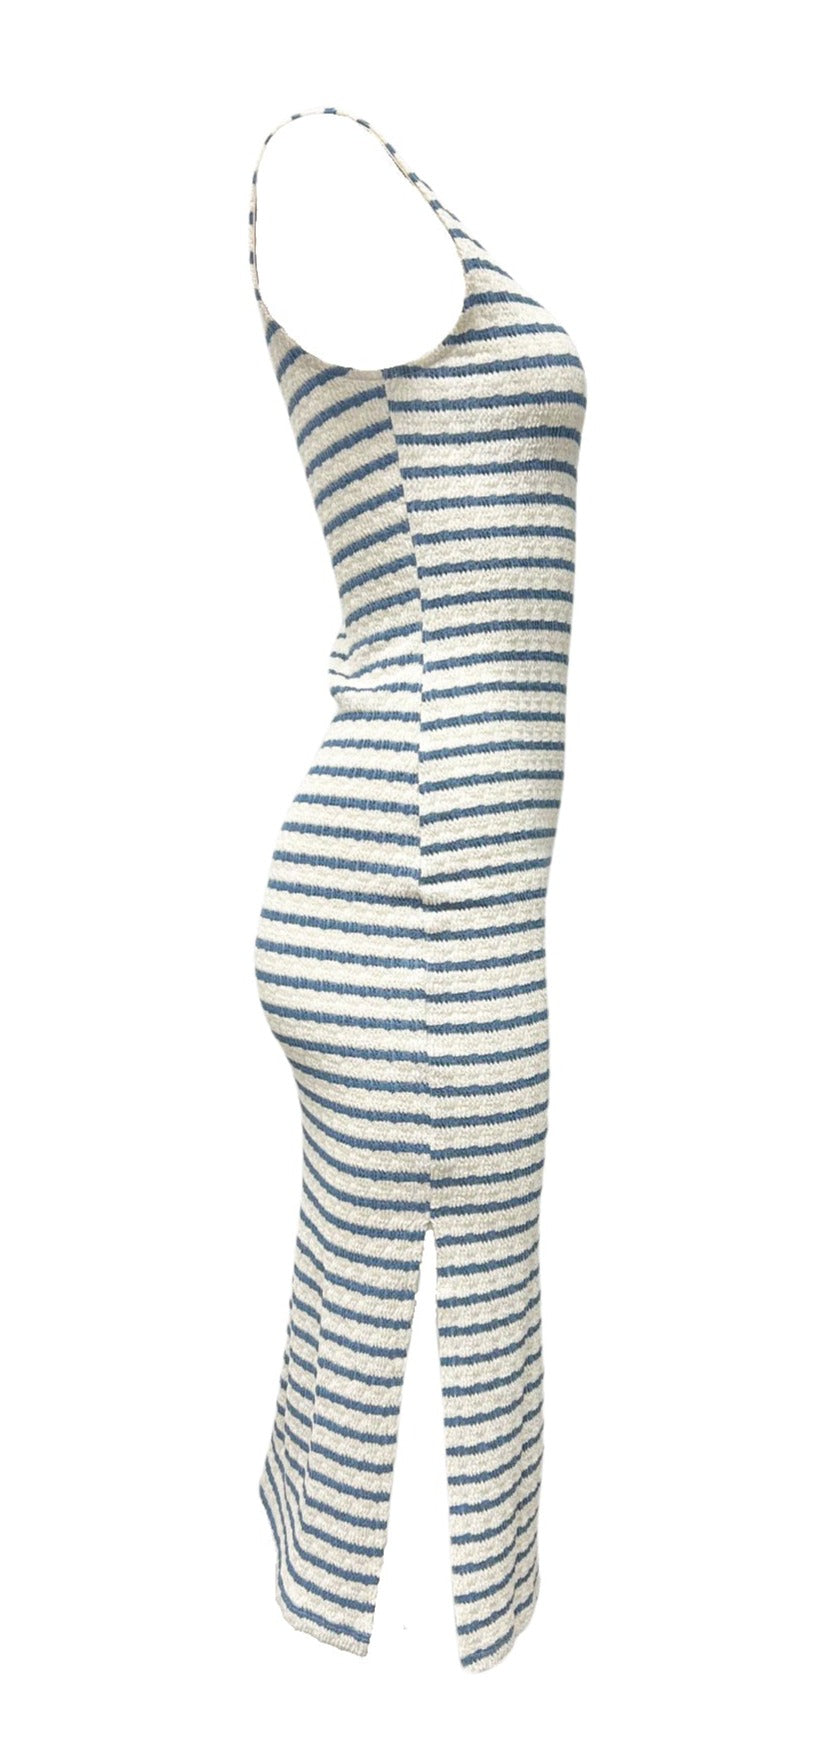 Striped Knit Scoop Neck Sleeveless Midi Dress - Chambray Blue & Cream Stripes